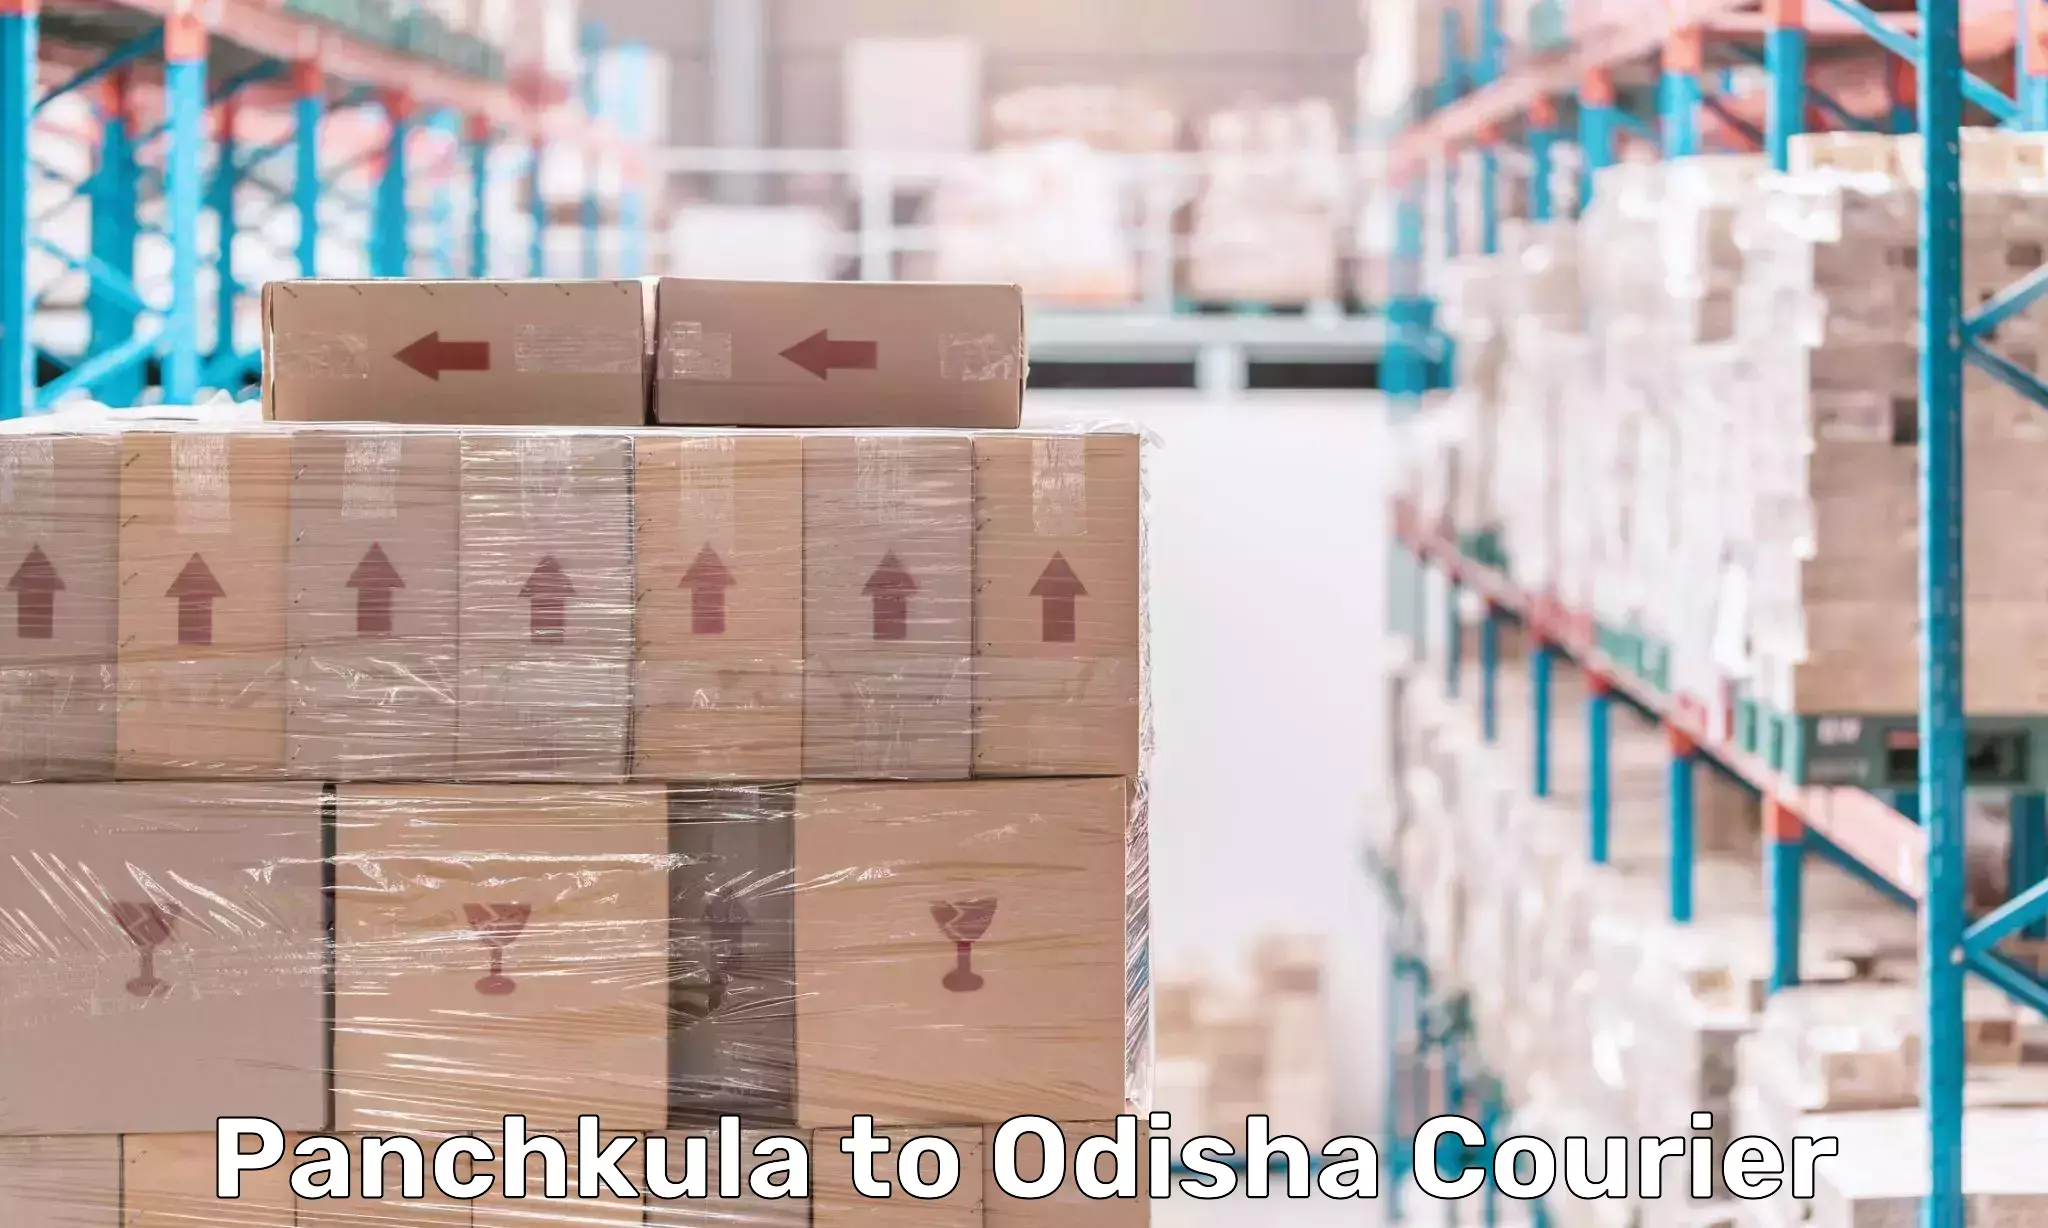 User-friendly delivery service Panchkula to Rourkela